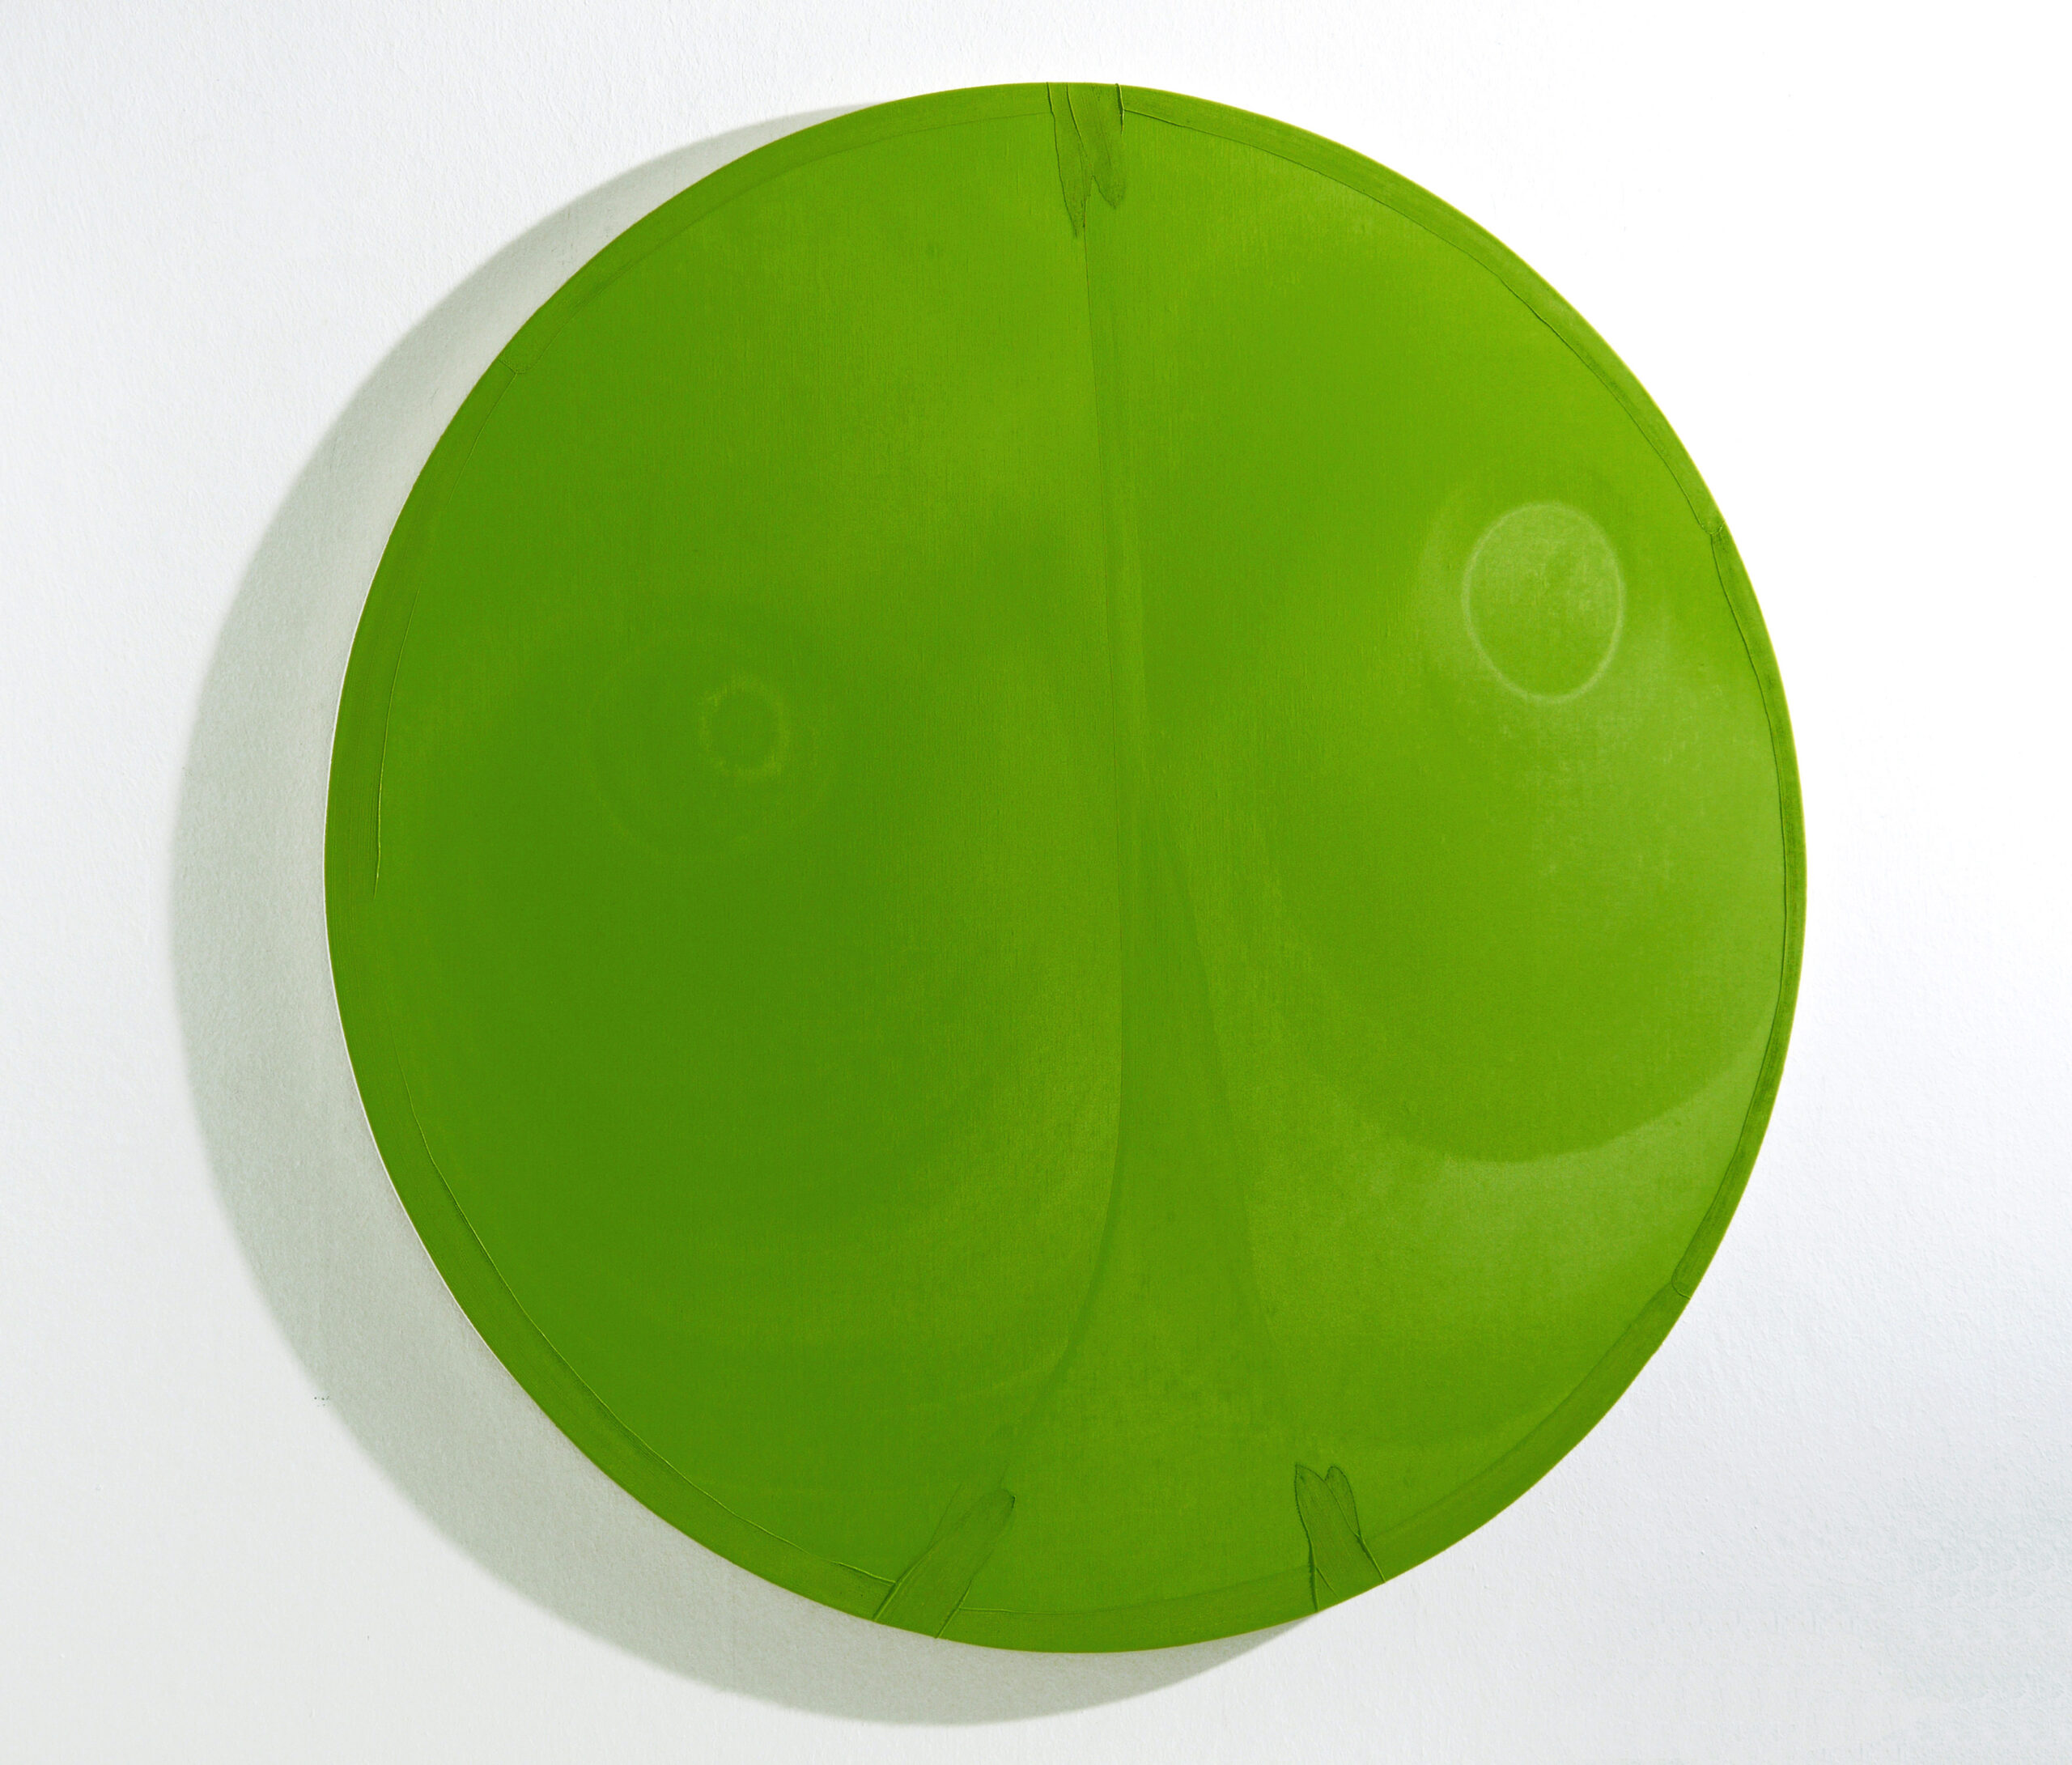 Antonio Catelani - flying kisses (green), 2020 oil on canvas cm 80 Ø